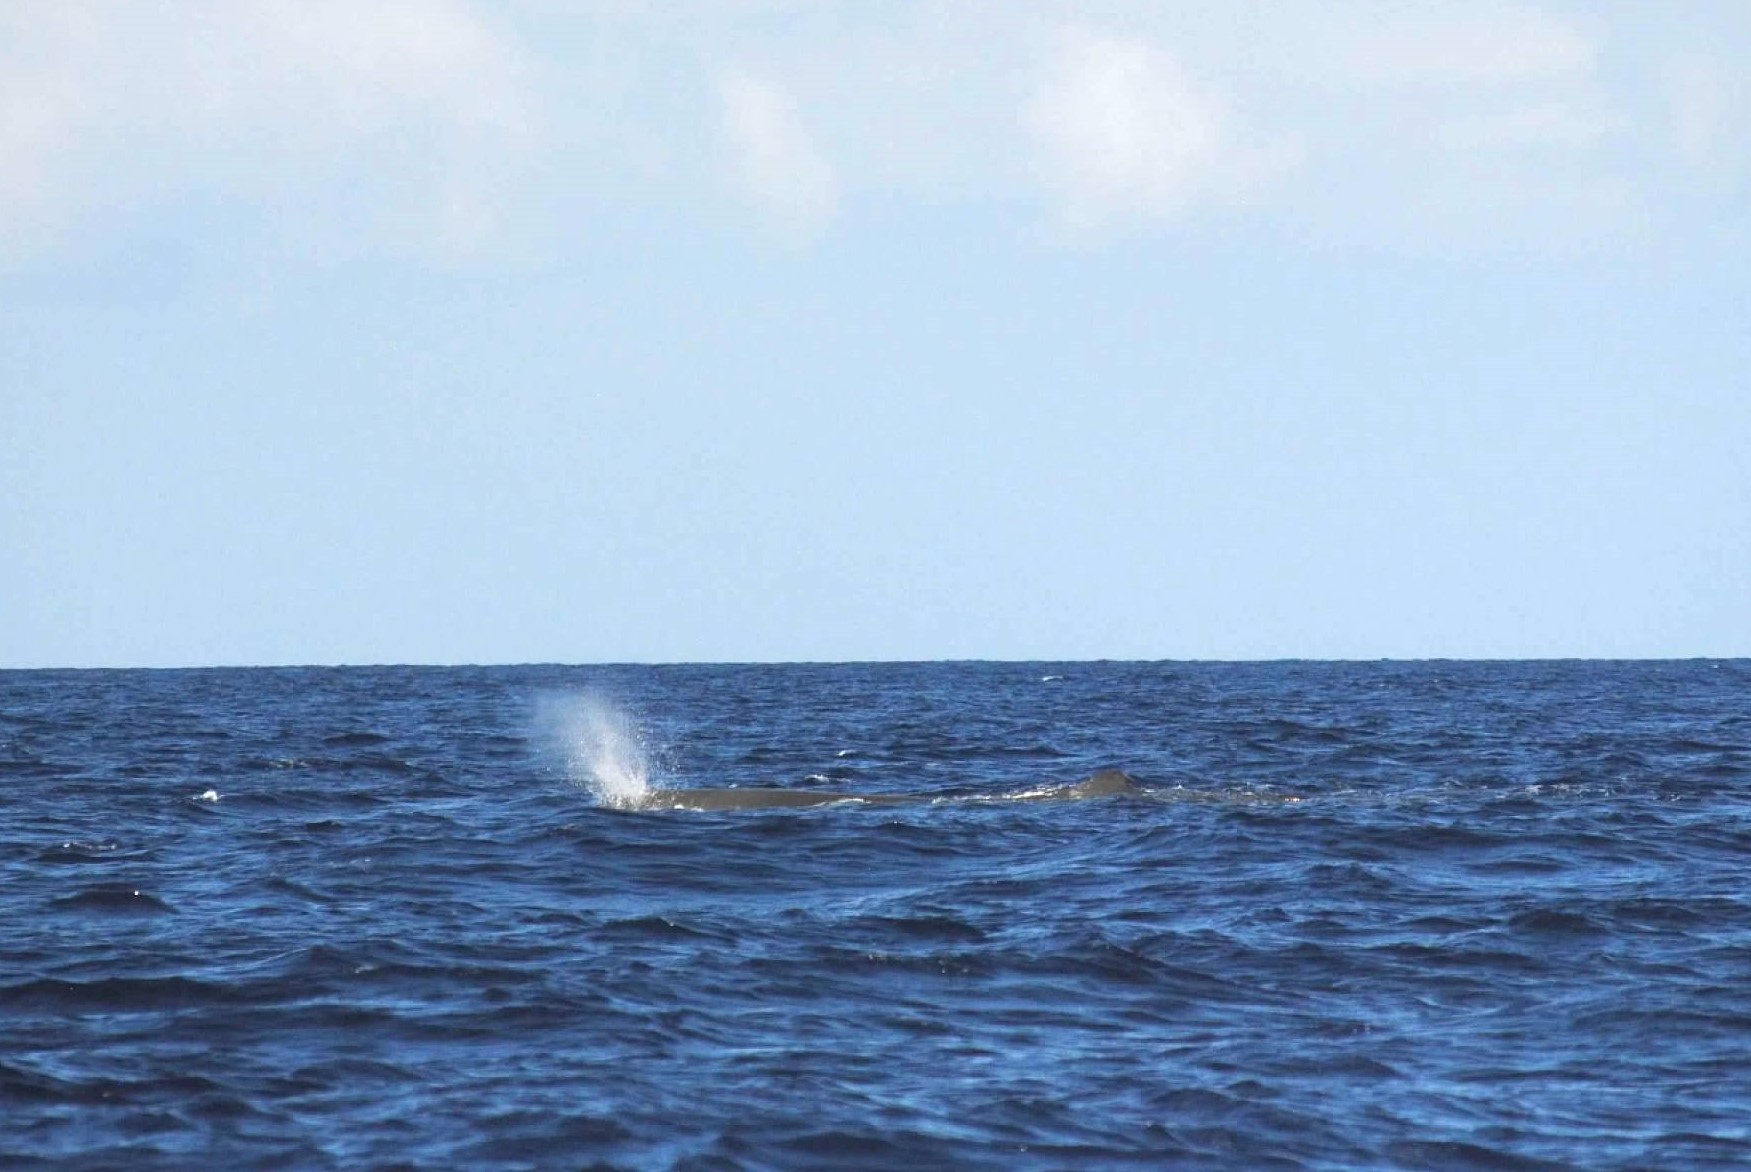 Sperm whale off Sao Miguel Island, Azores